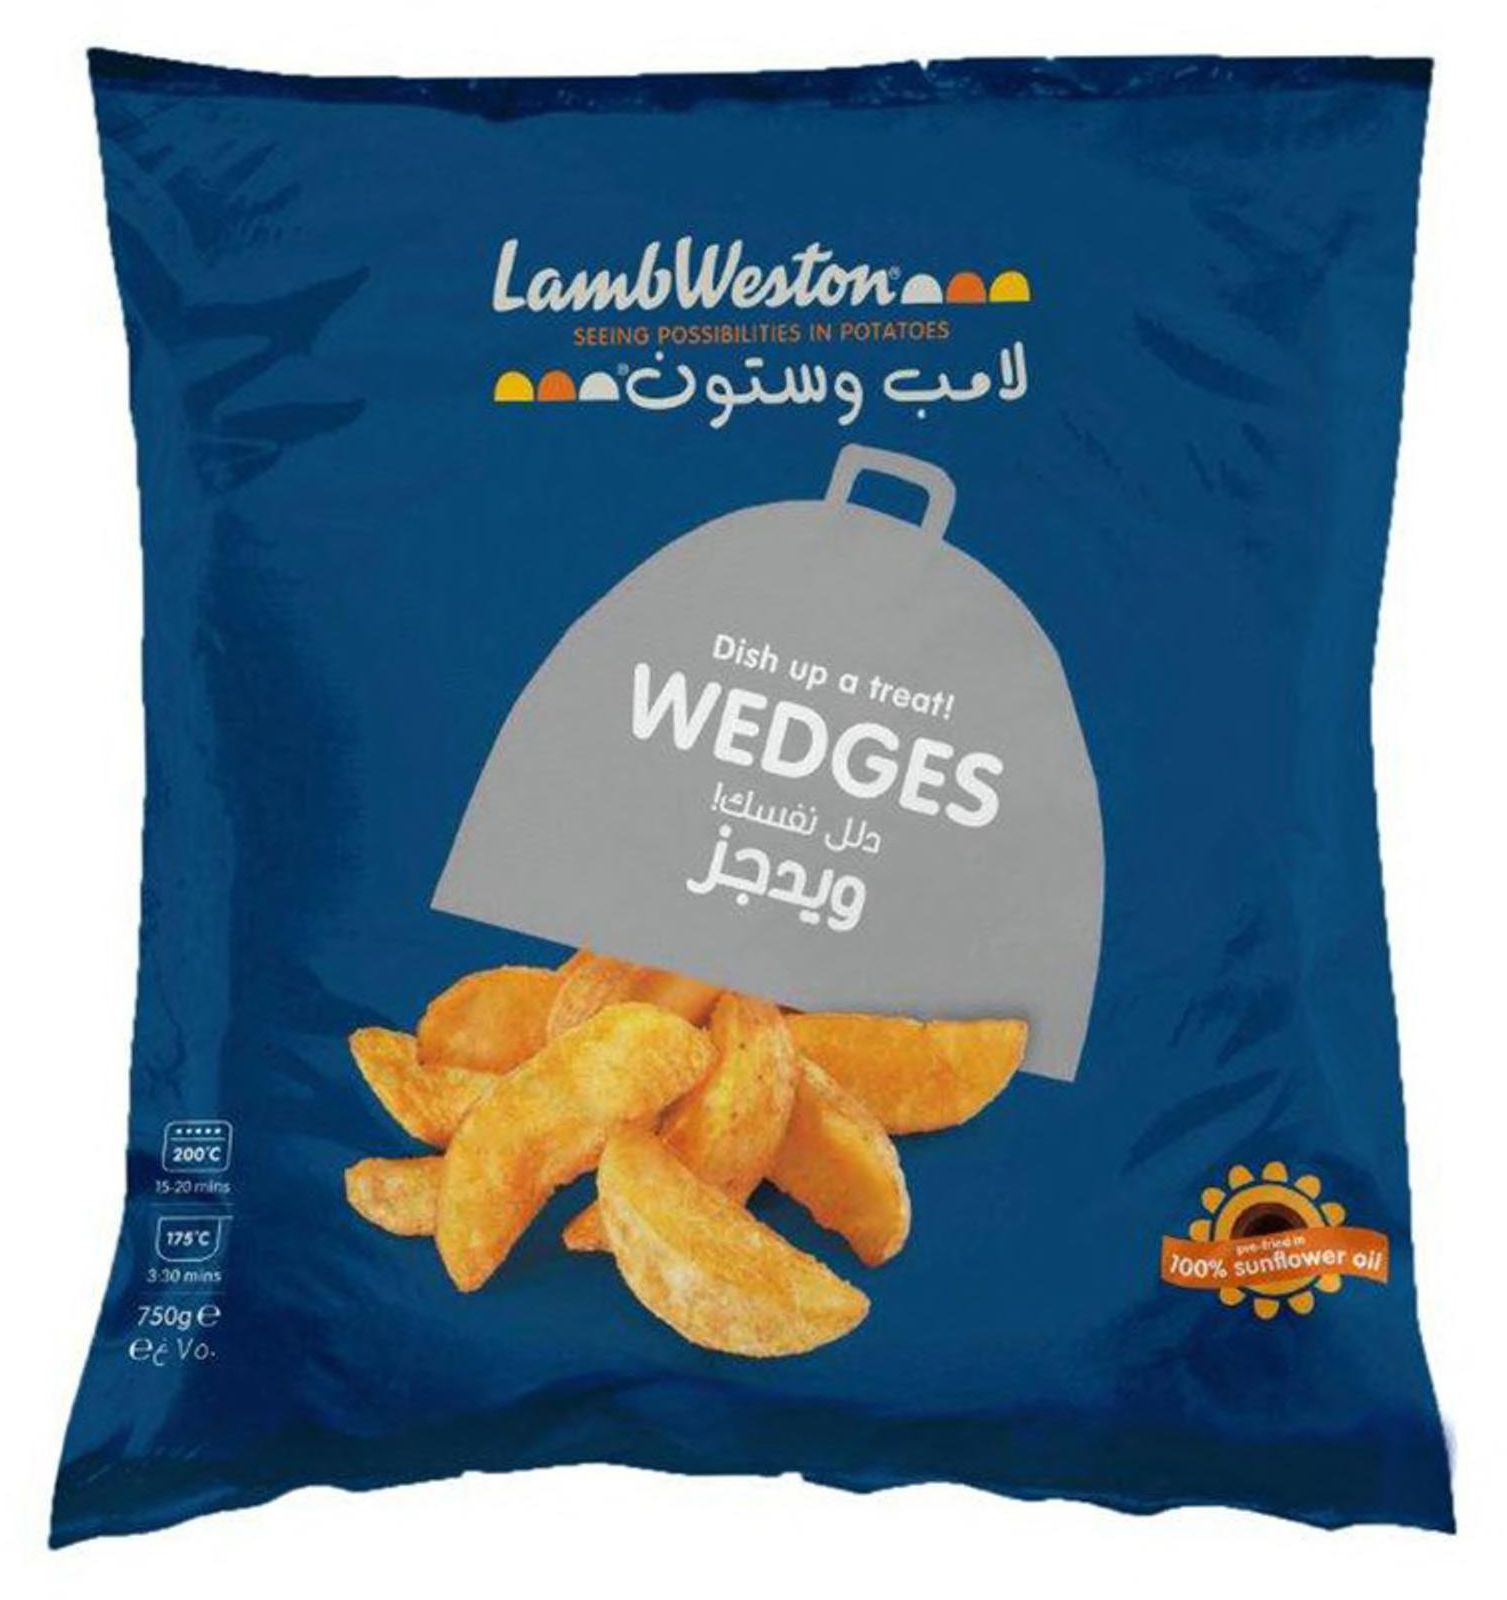 Lambweston potato wedges 750 g